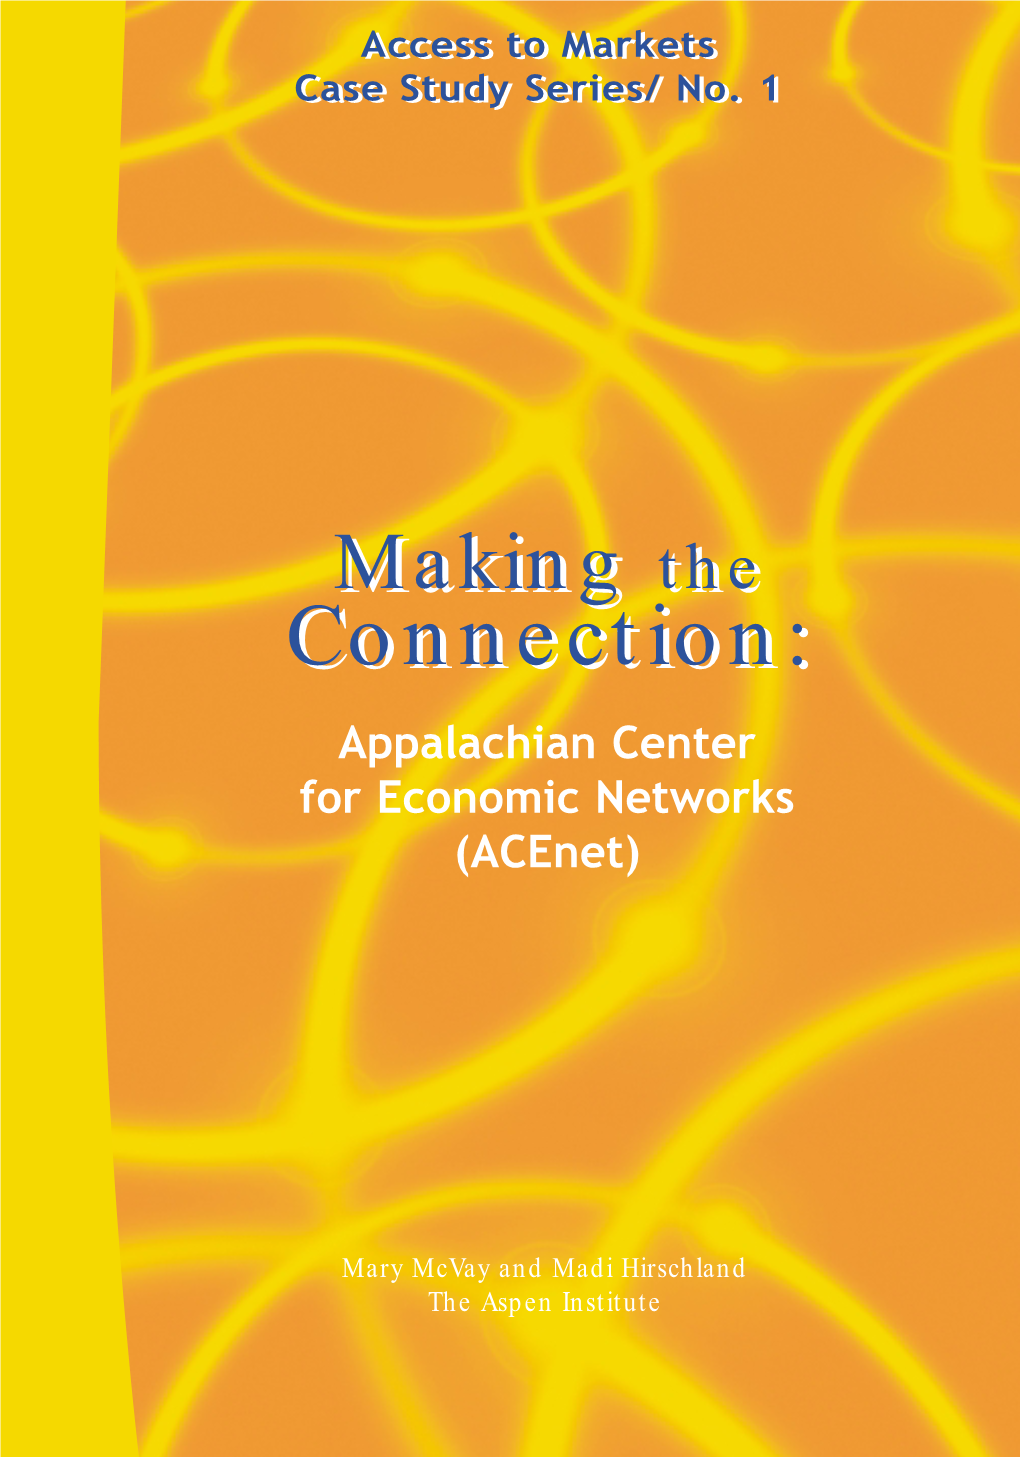 Connection:Connection: Appalachian Center for Economic Networks (Acenet)